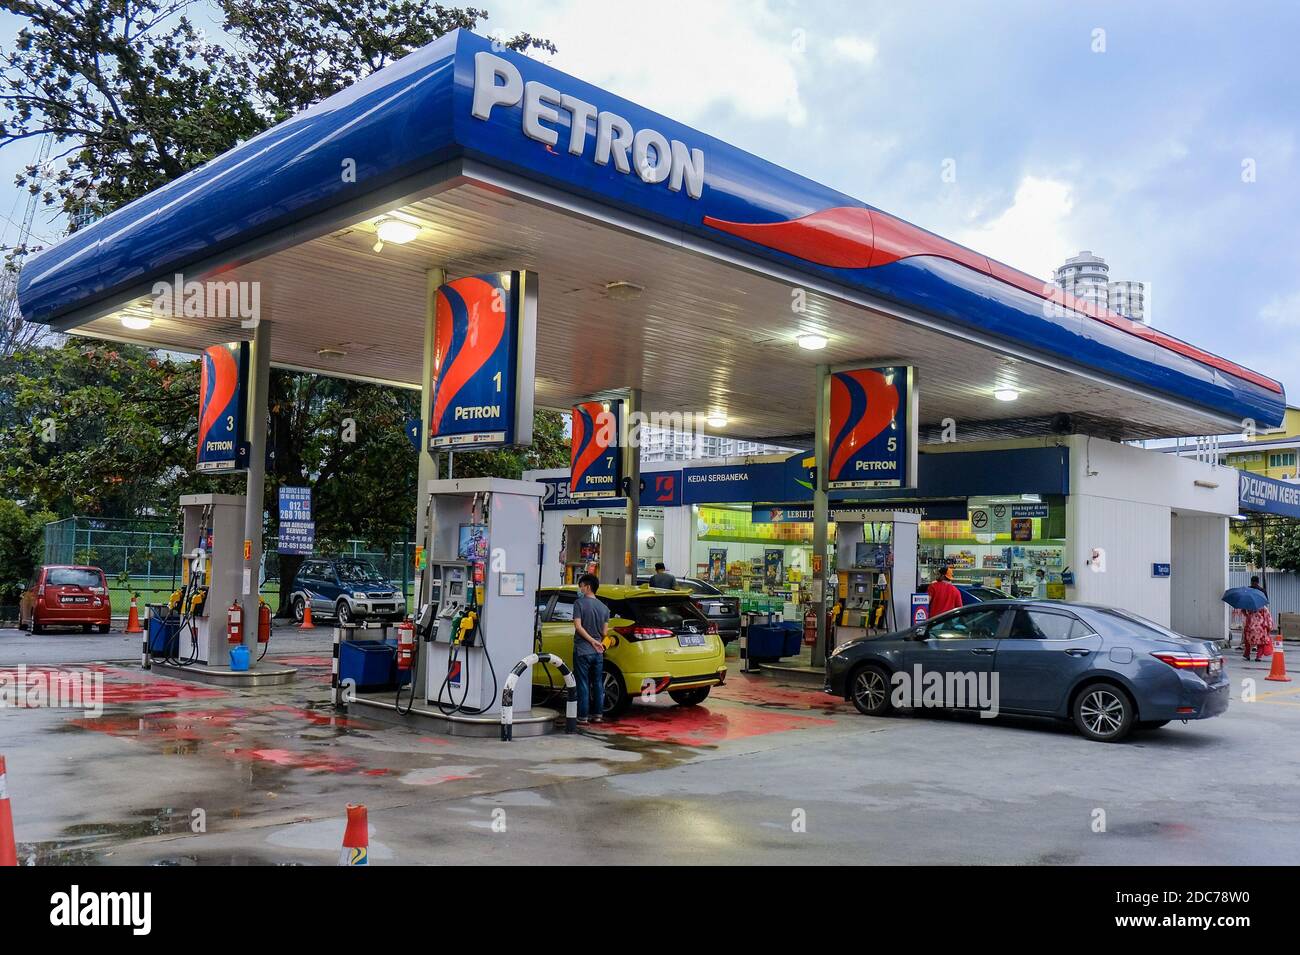 Petron share price